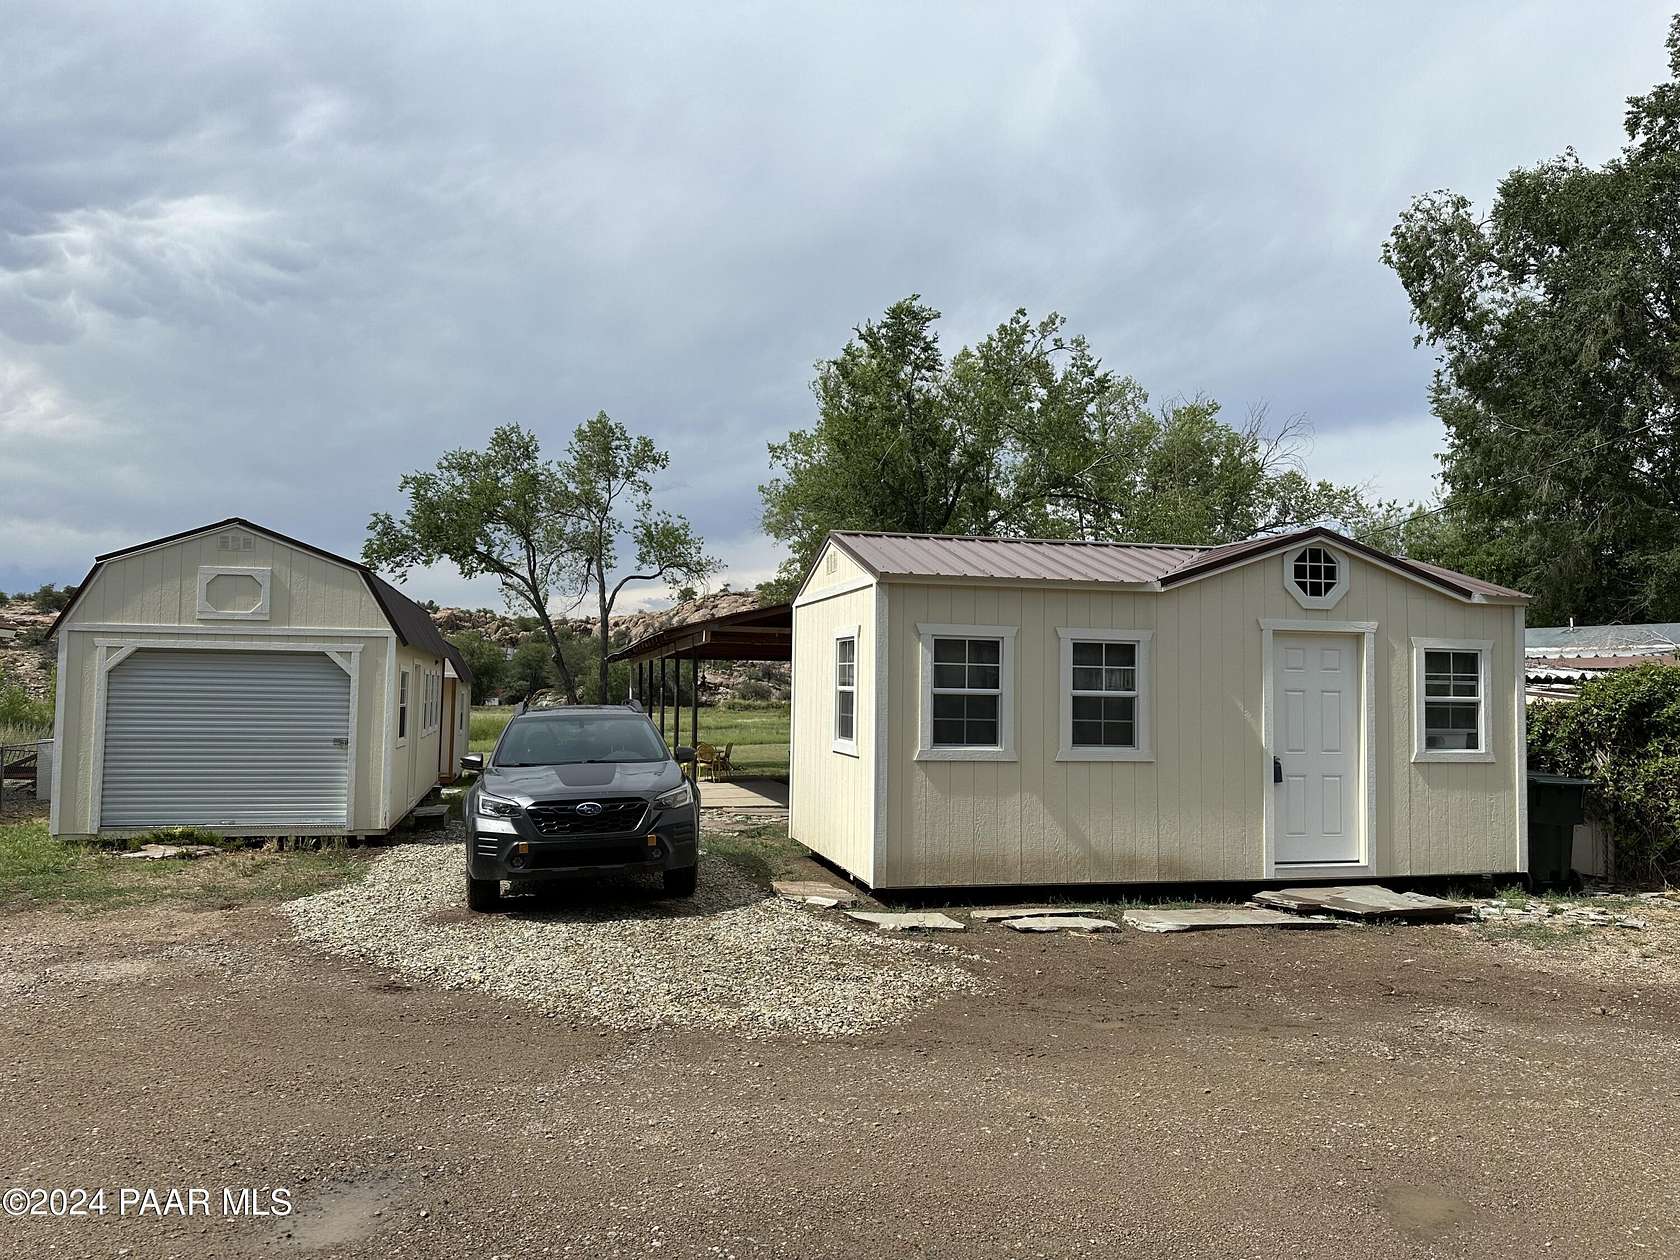 0.17 Acres of Residential Land for Sale in Prescott, Arizona